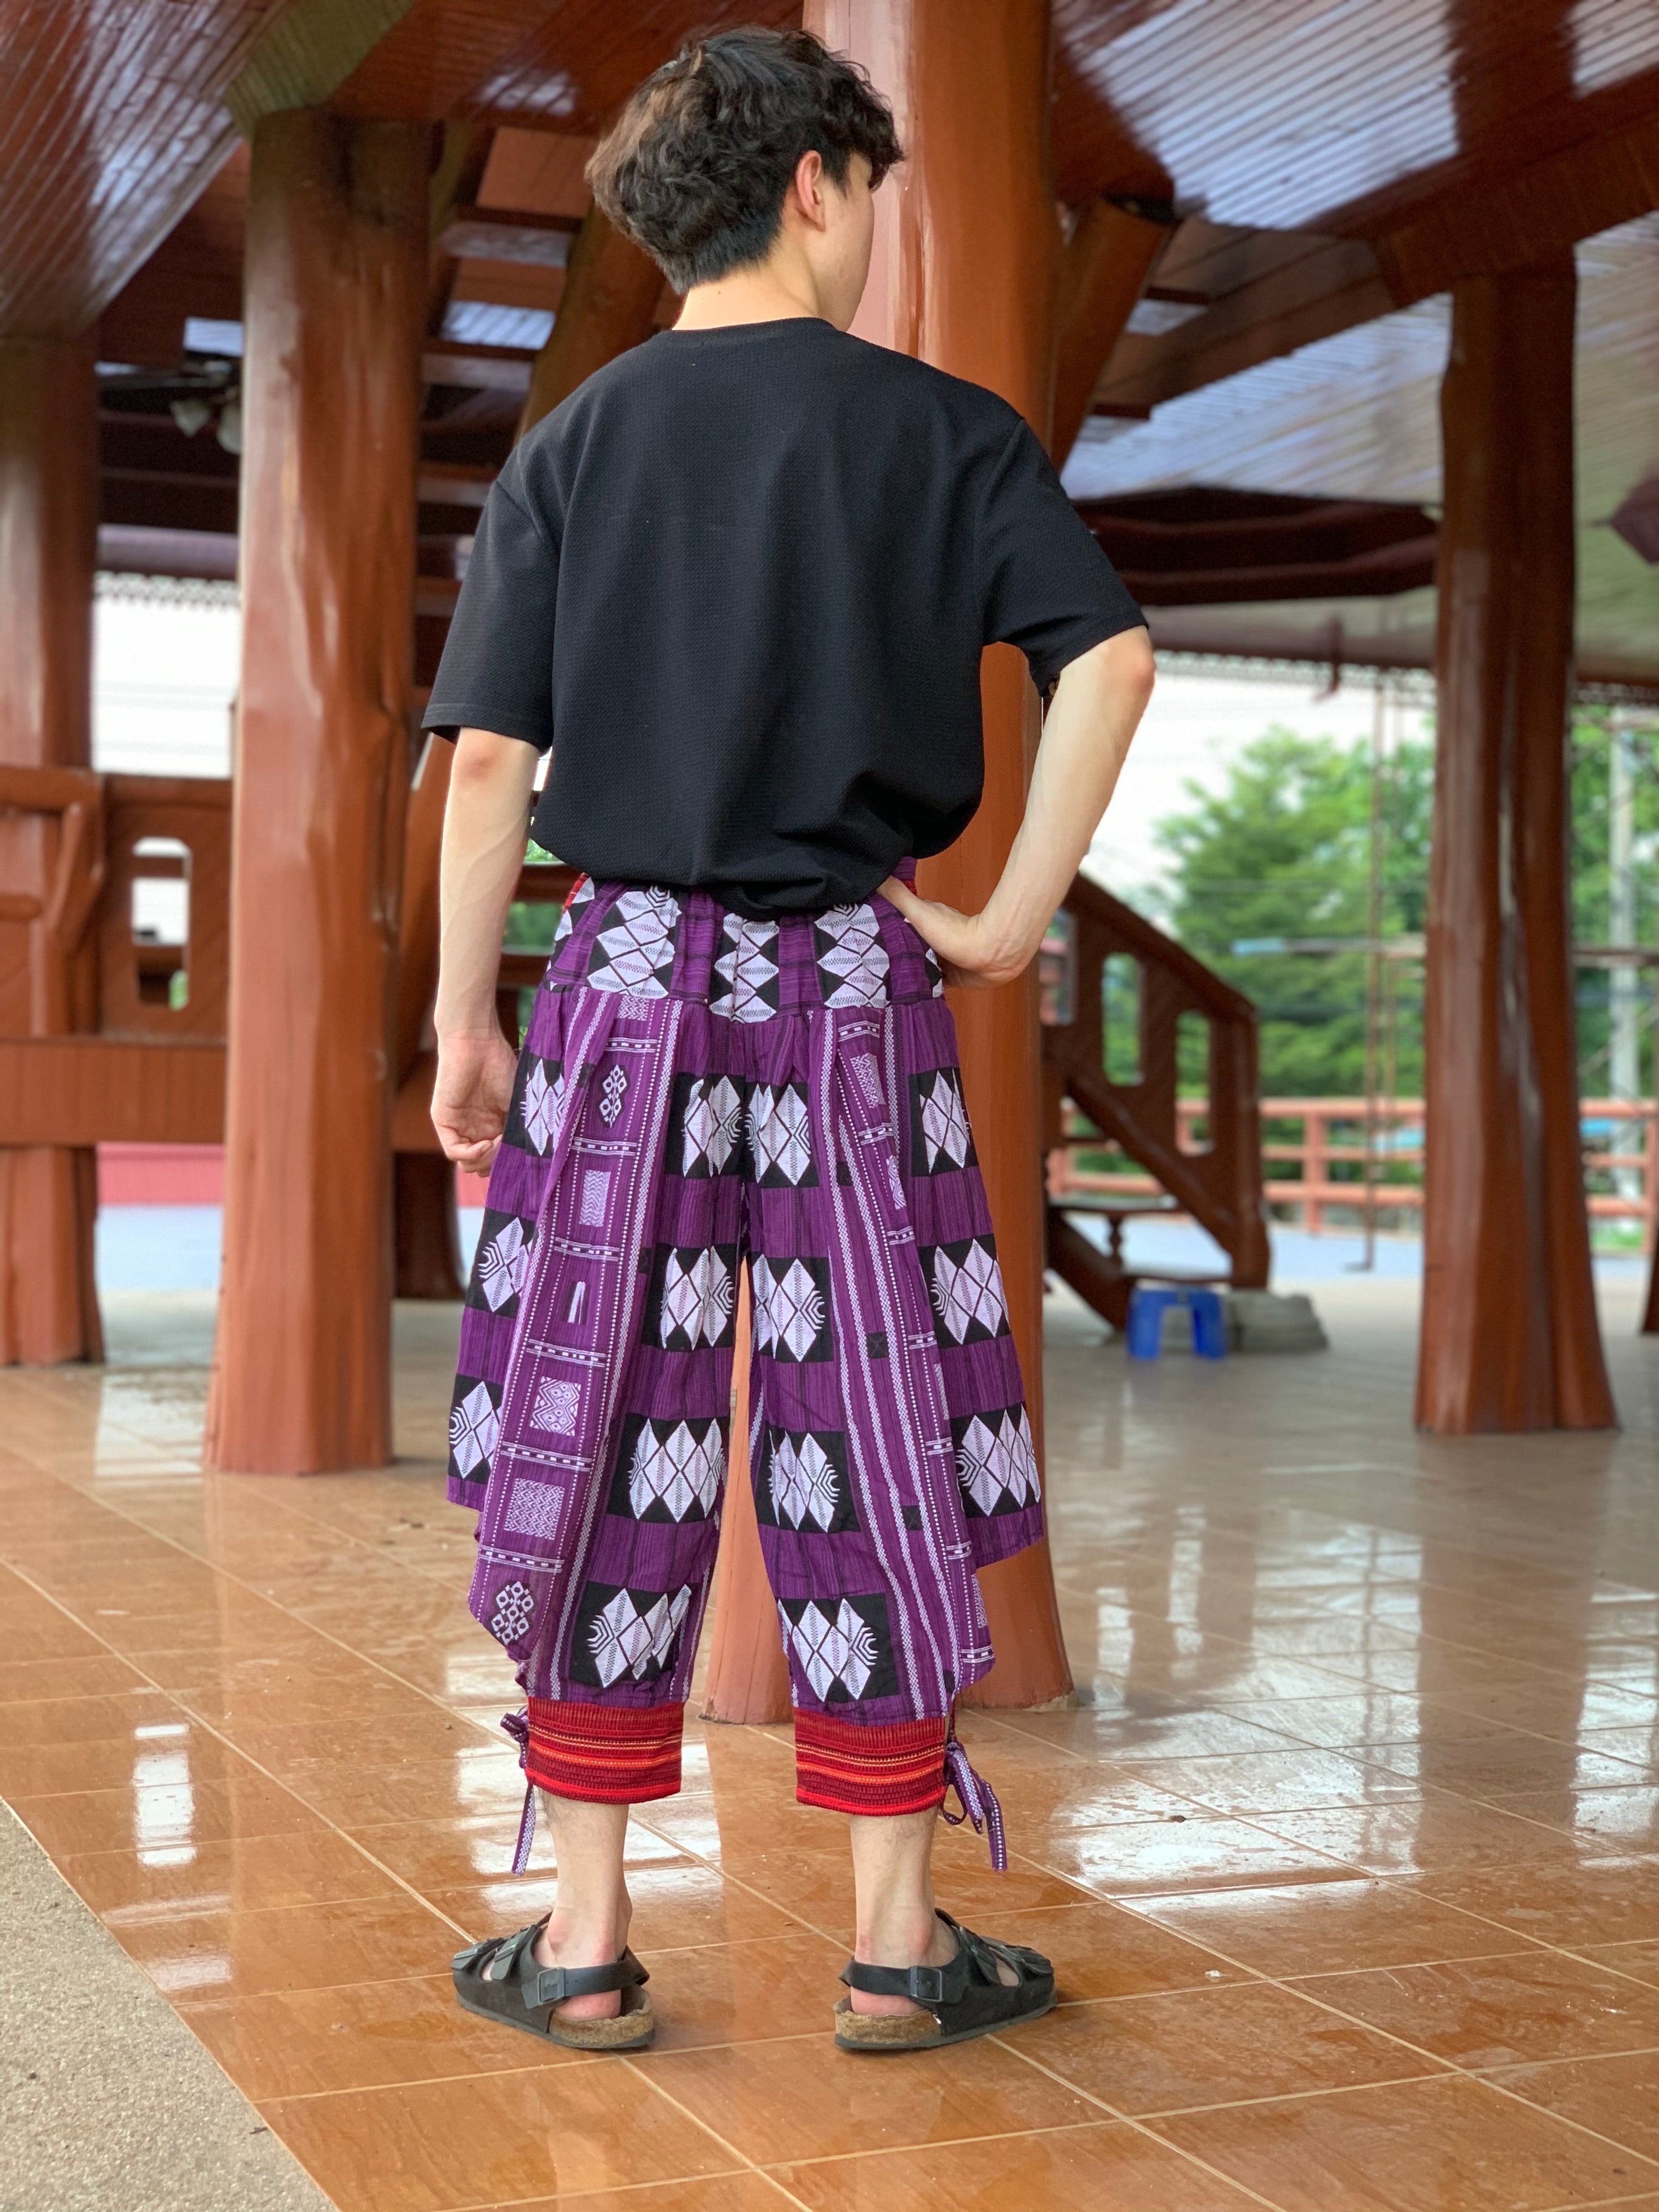 Purple harem pants, Thai tribal style pants